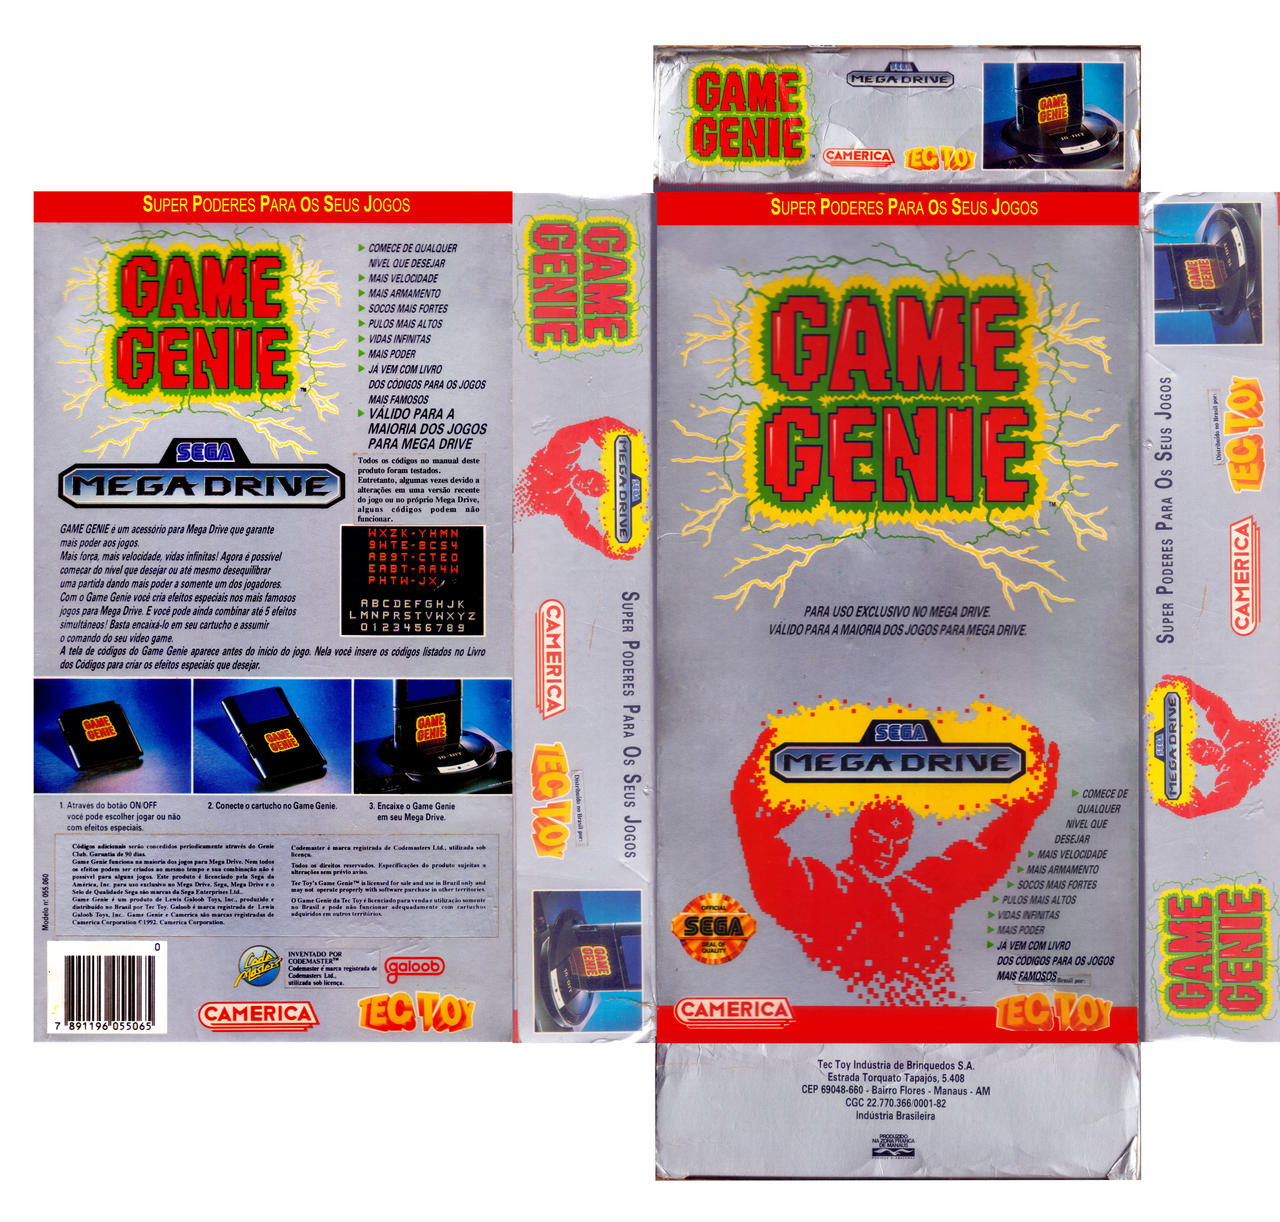 SEGA GG - TEC TOY Genesis Game Genie Box Cover by gamejelly on DeviantArt